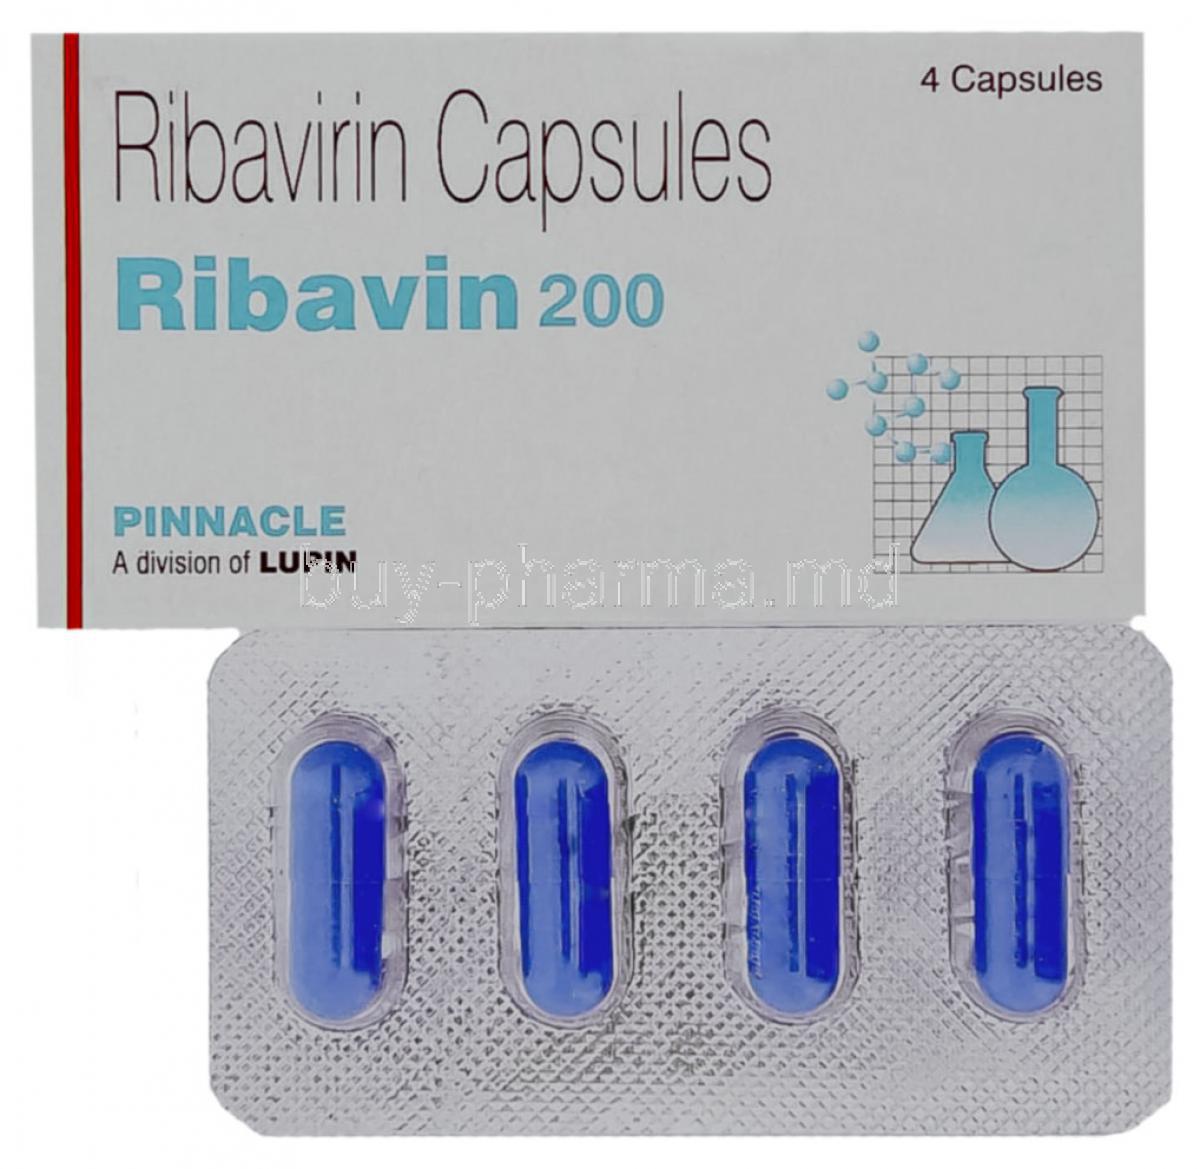 Ribavin, Ribavirin 200 mg Capsule and box